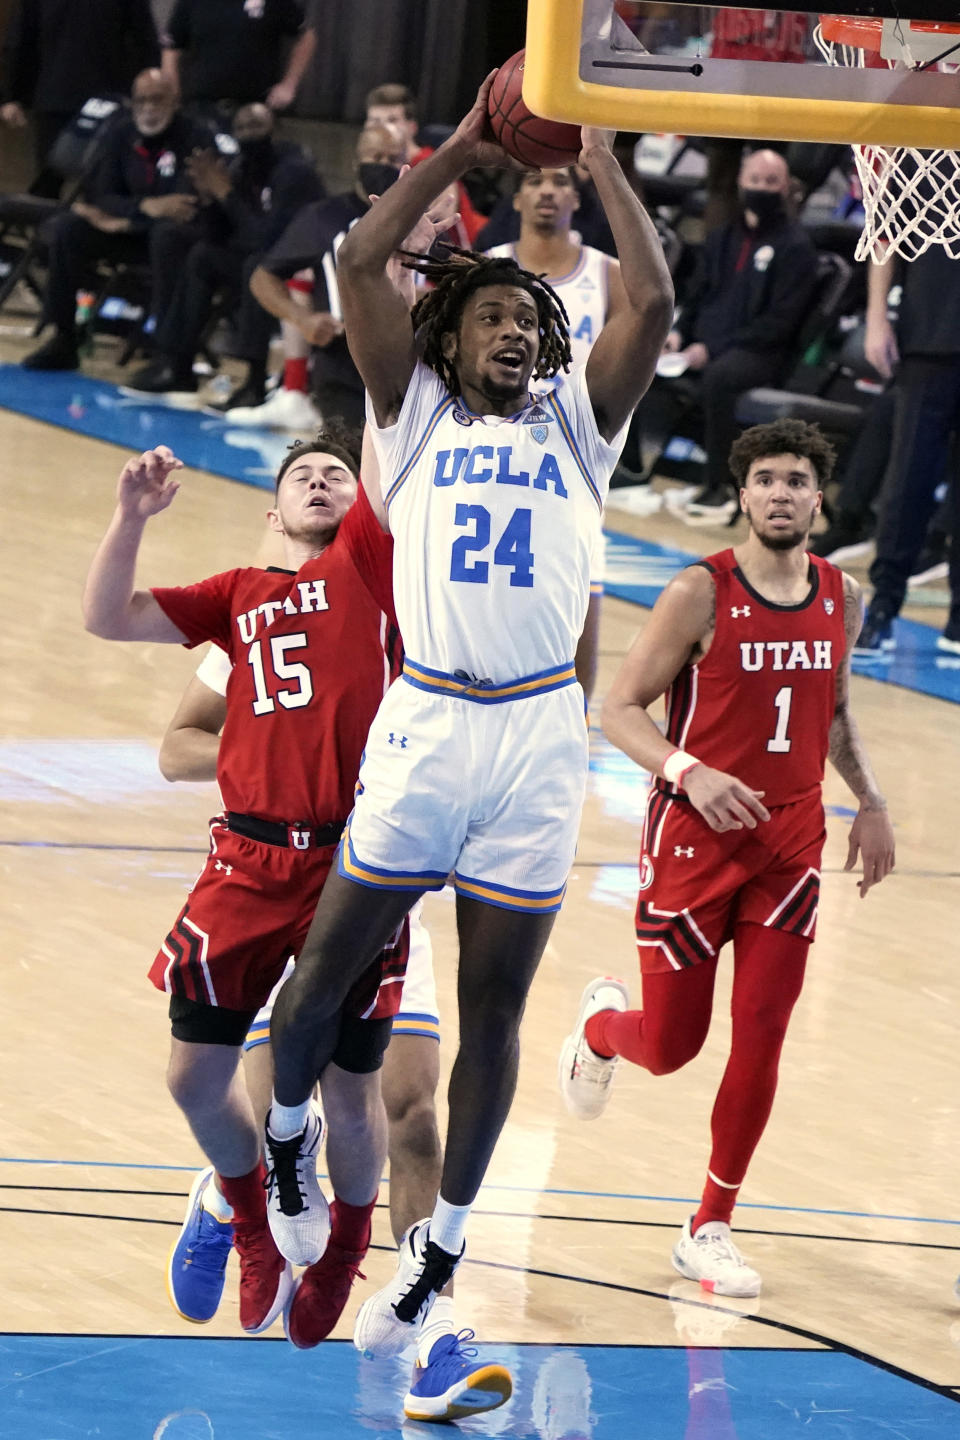 UCLA forward Jalen Hill (24) drives past Utah guard Rylan Jones (15) during the second half of an NCAA college basketball game Thursday, Dec. 31, 2020, in Los Angeles. (AP Photo/Marcio Jose Sanchez)